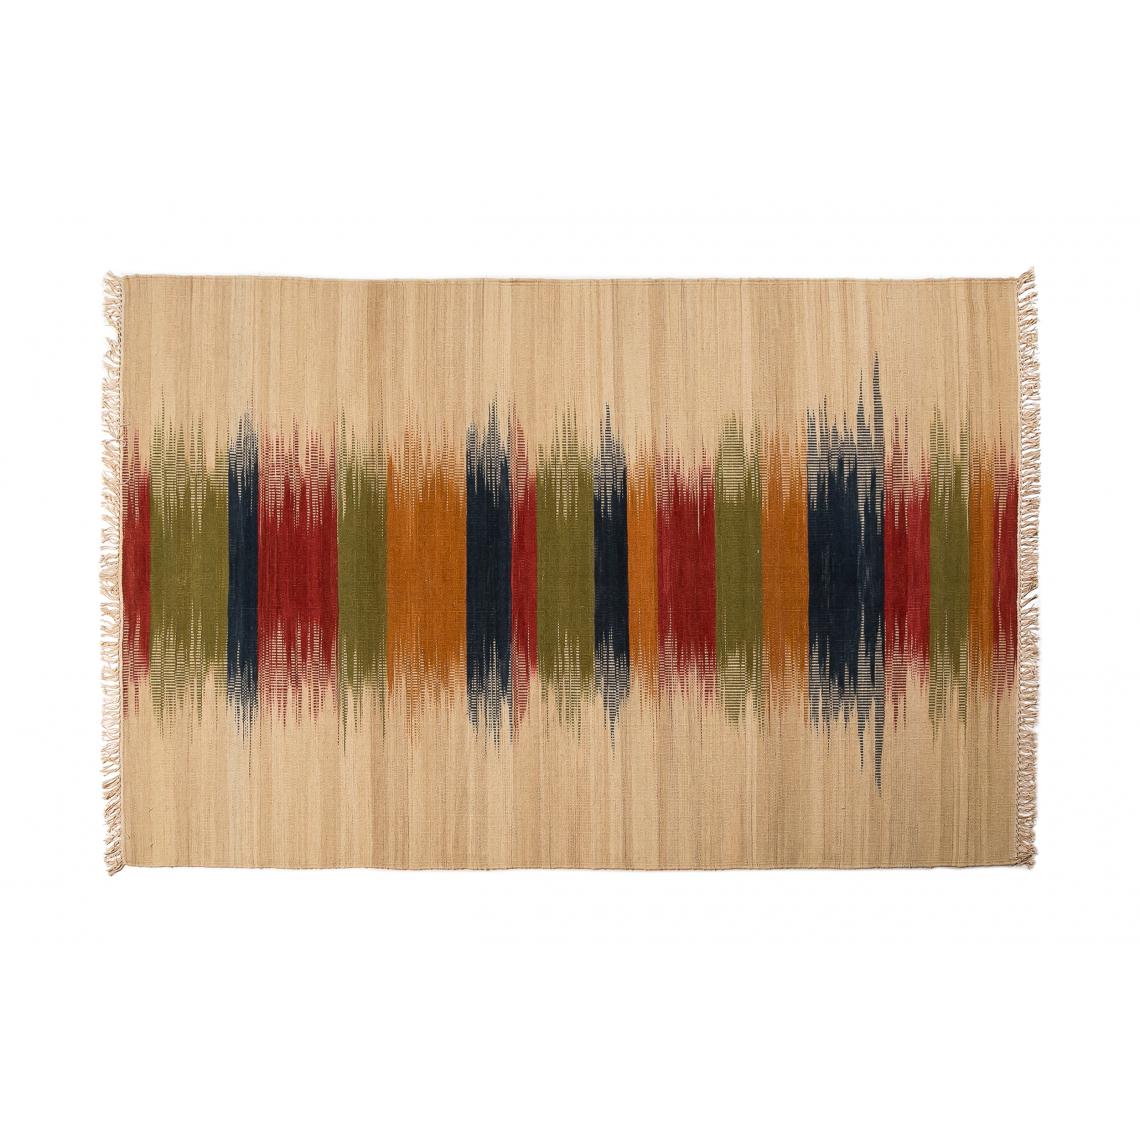 Alter - Tapis moderne Miami, style kilim, 100% coton, multicolore, 240x170cm - Tapis